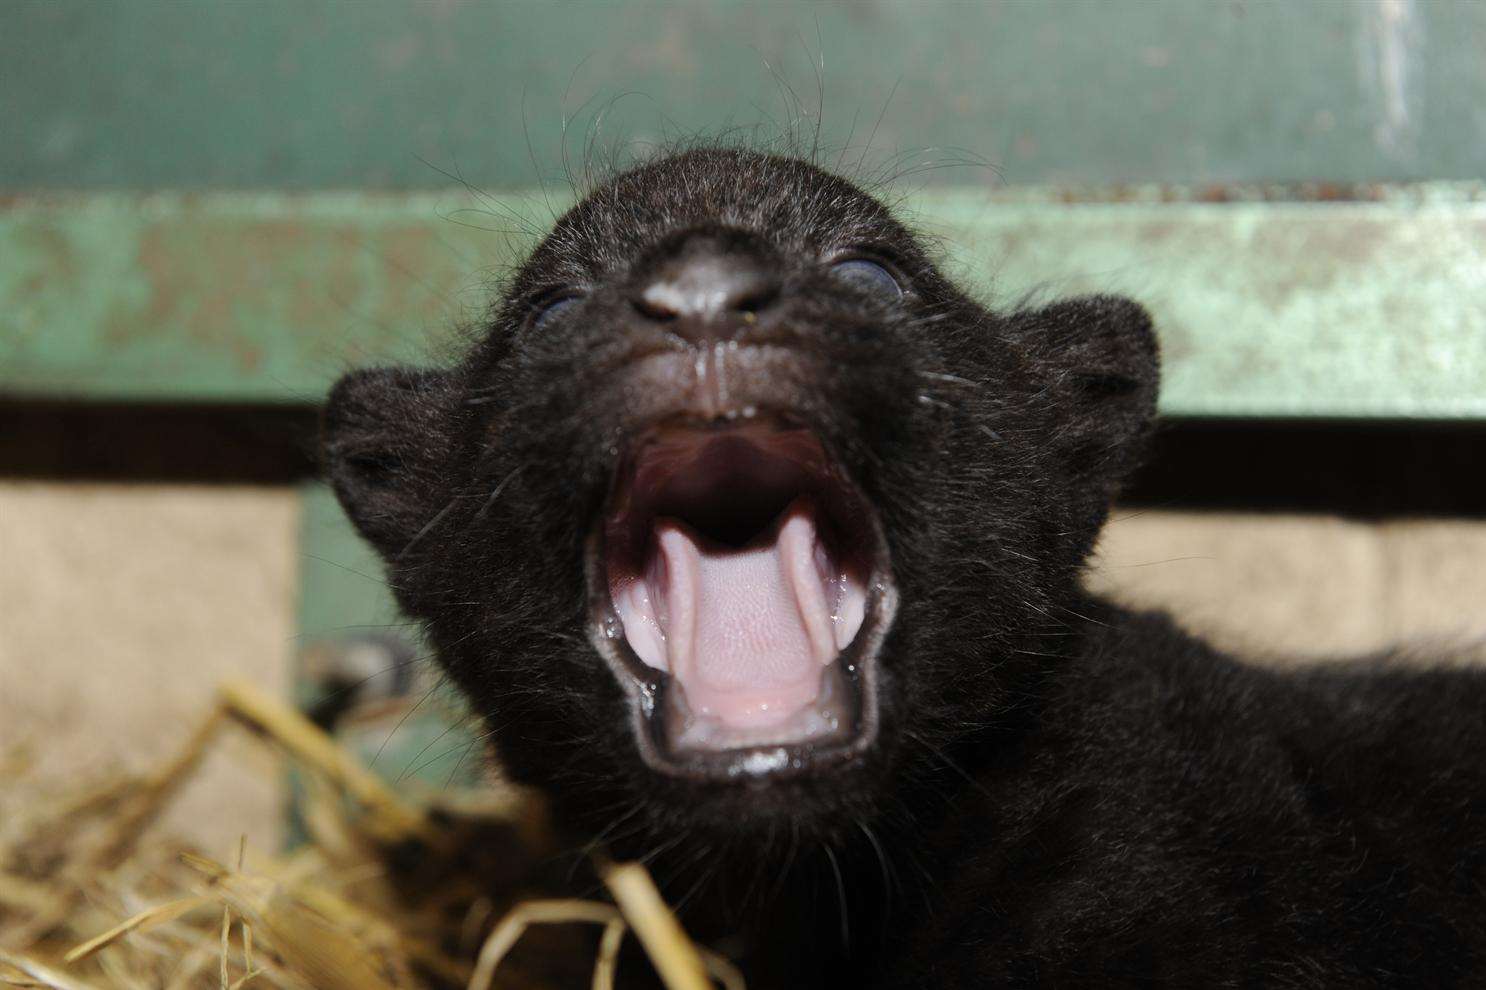 A baby jaguar gives a big yawn